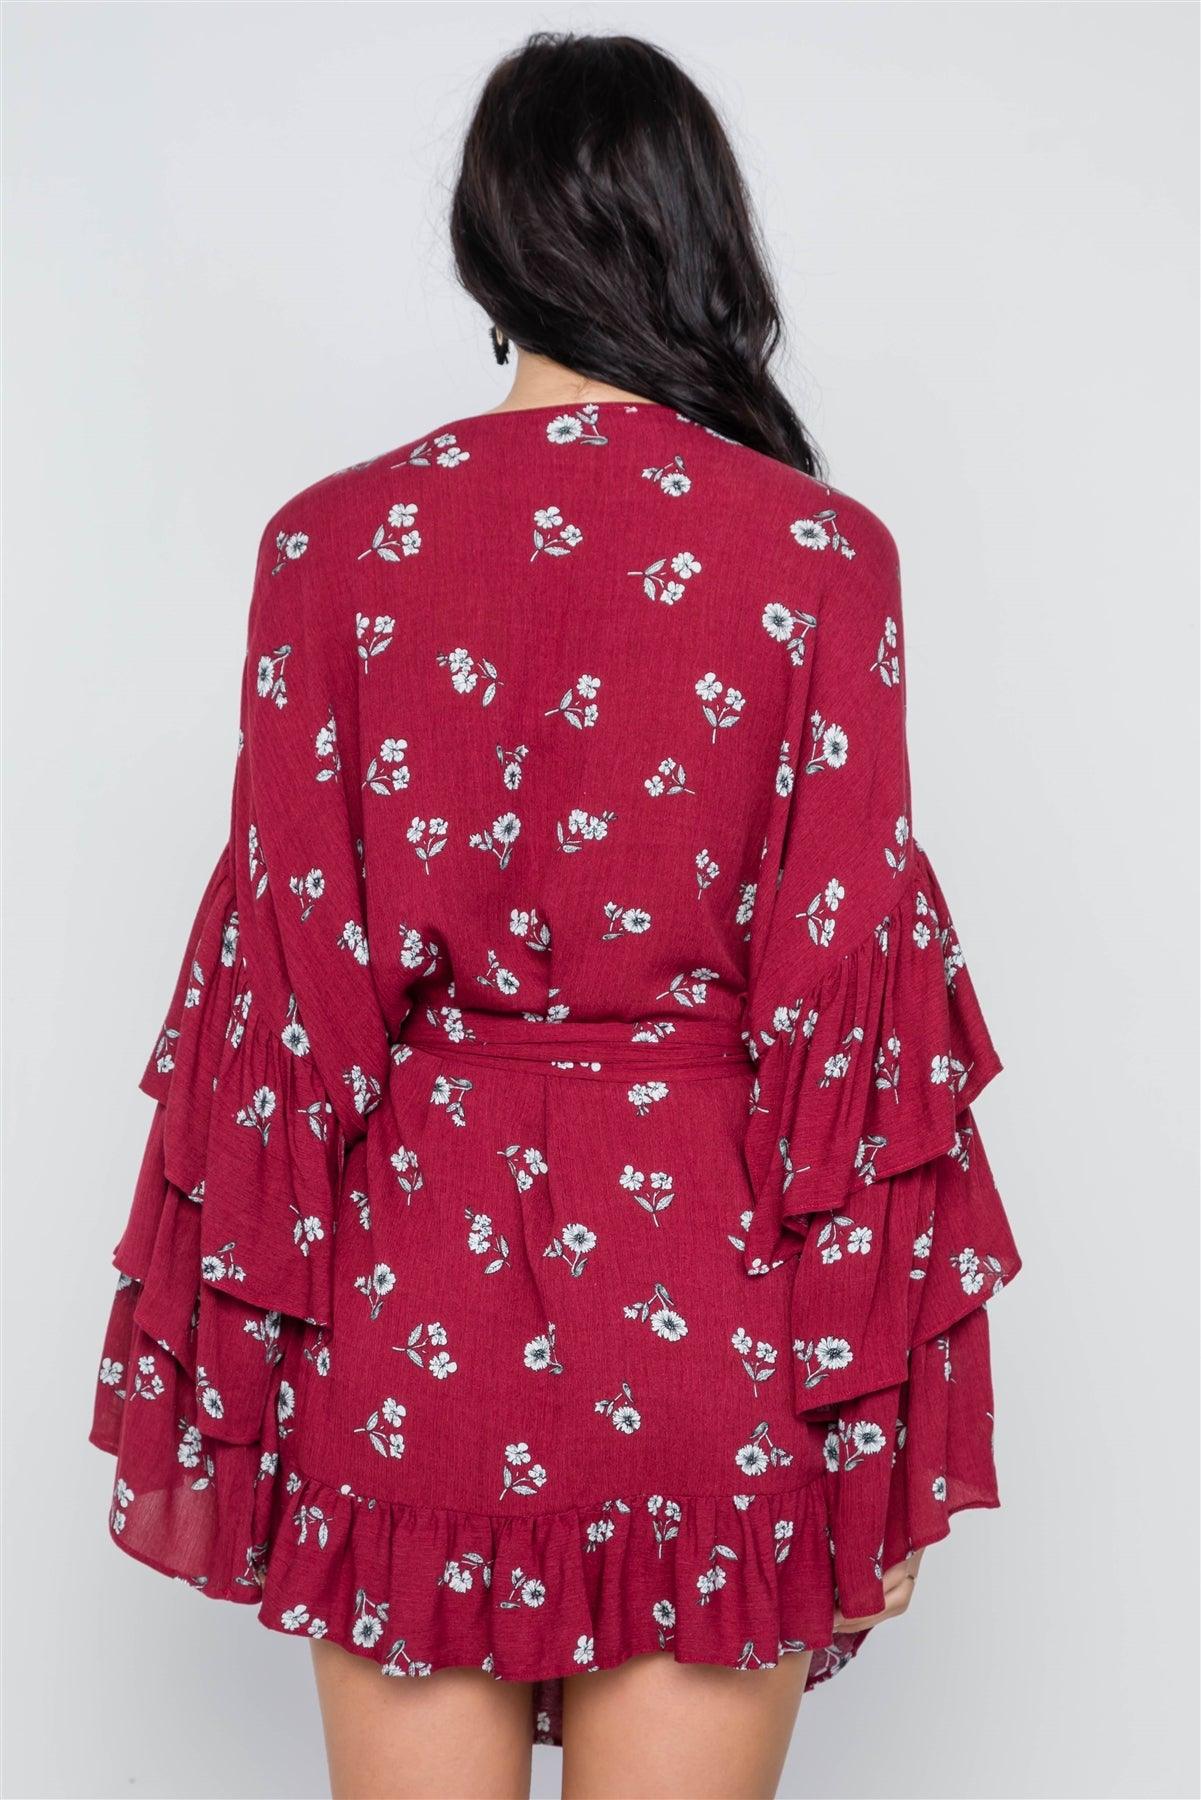 Red Burgundy Floral Print Long Bell Sleeves Dress /2-2-1